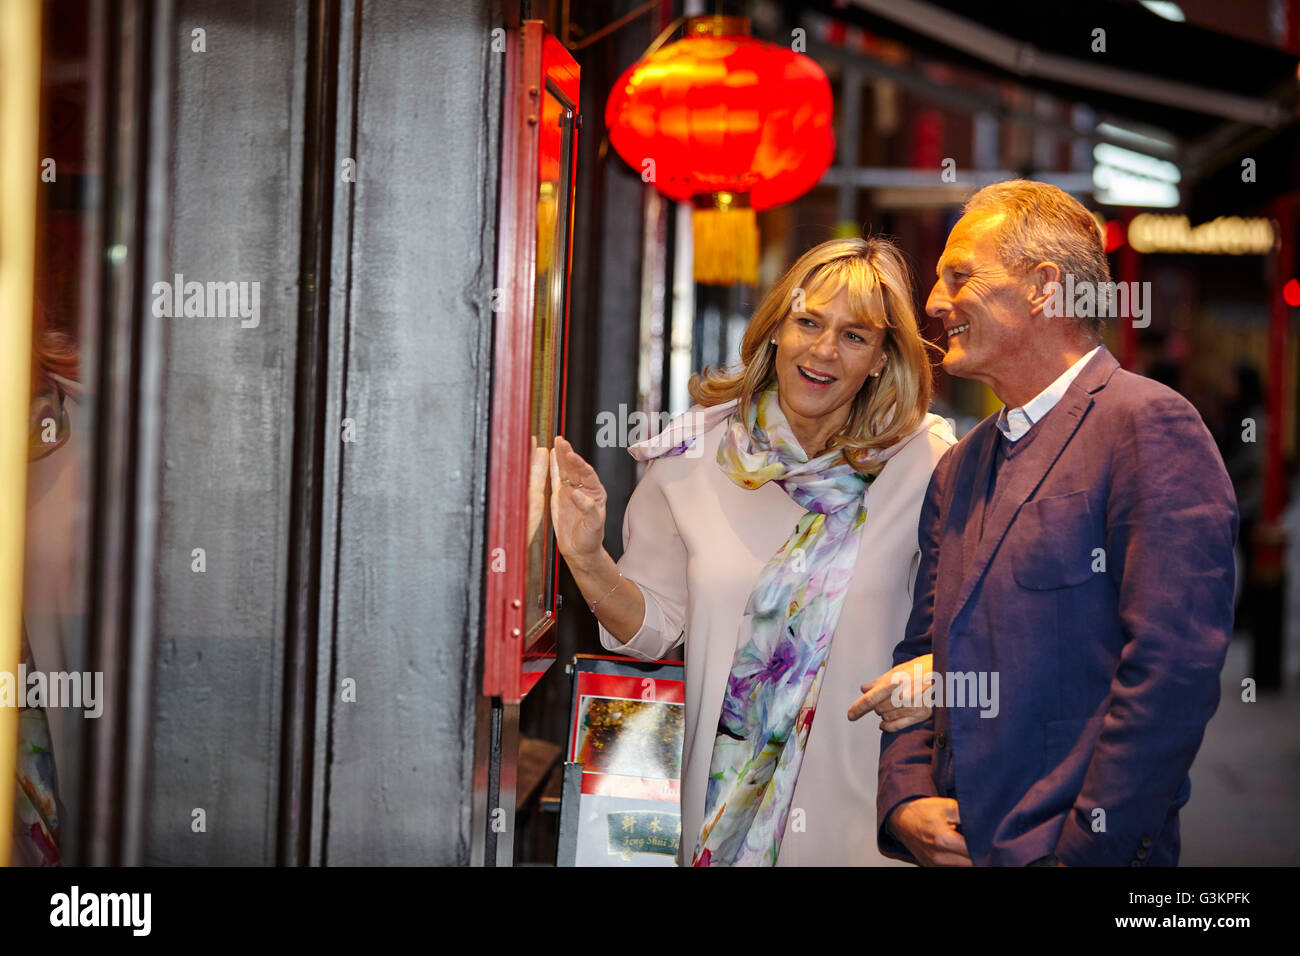 Reifes dating paar lesen Restaurant Speisekarte in China Town, London, UK Stockfoto